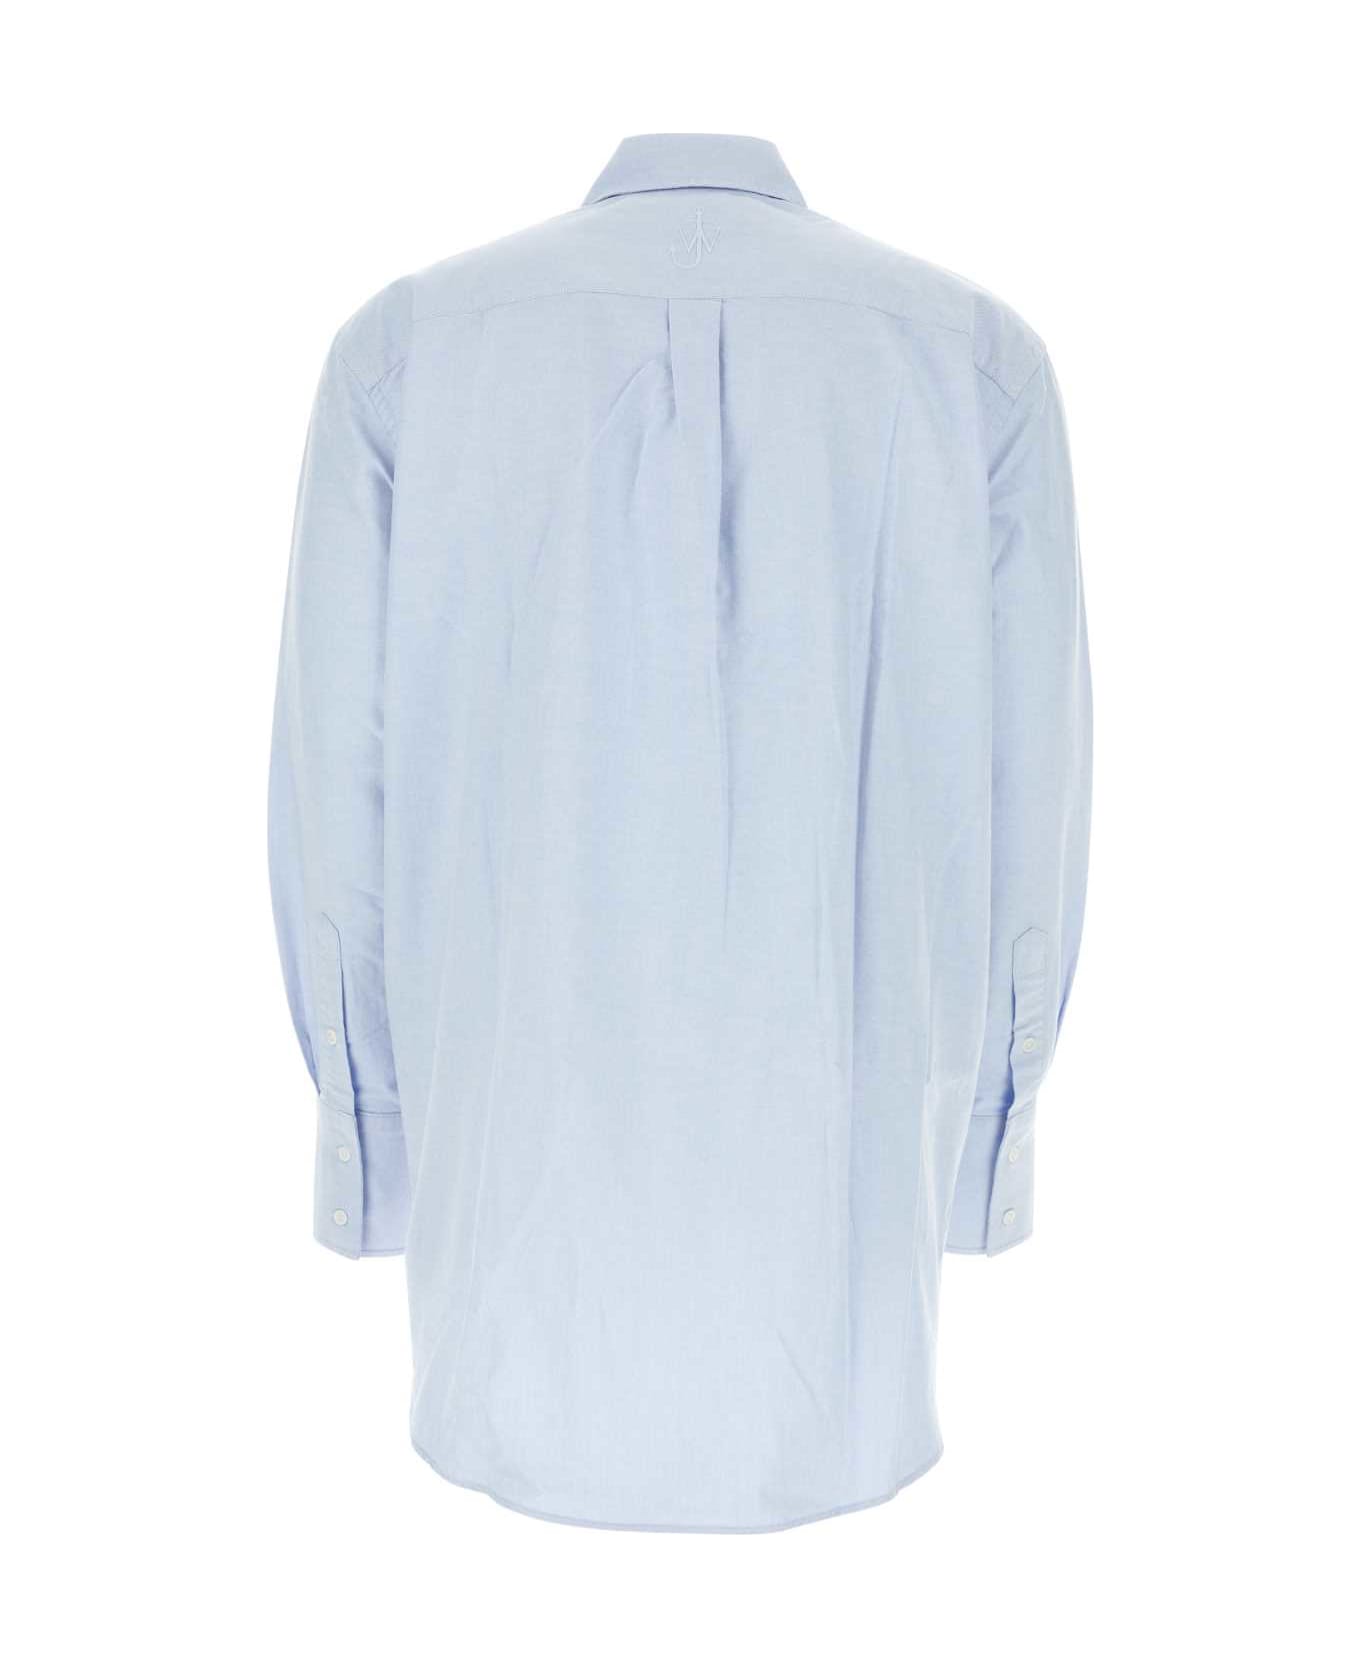 J.W. Anderson Light Blue Oxford Oversize Shirt - LIGHTBLUE